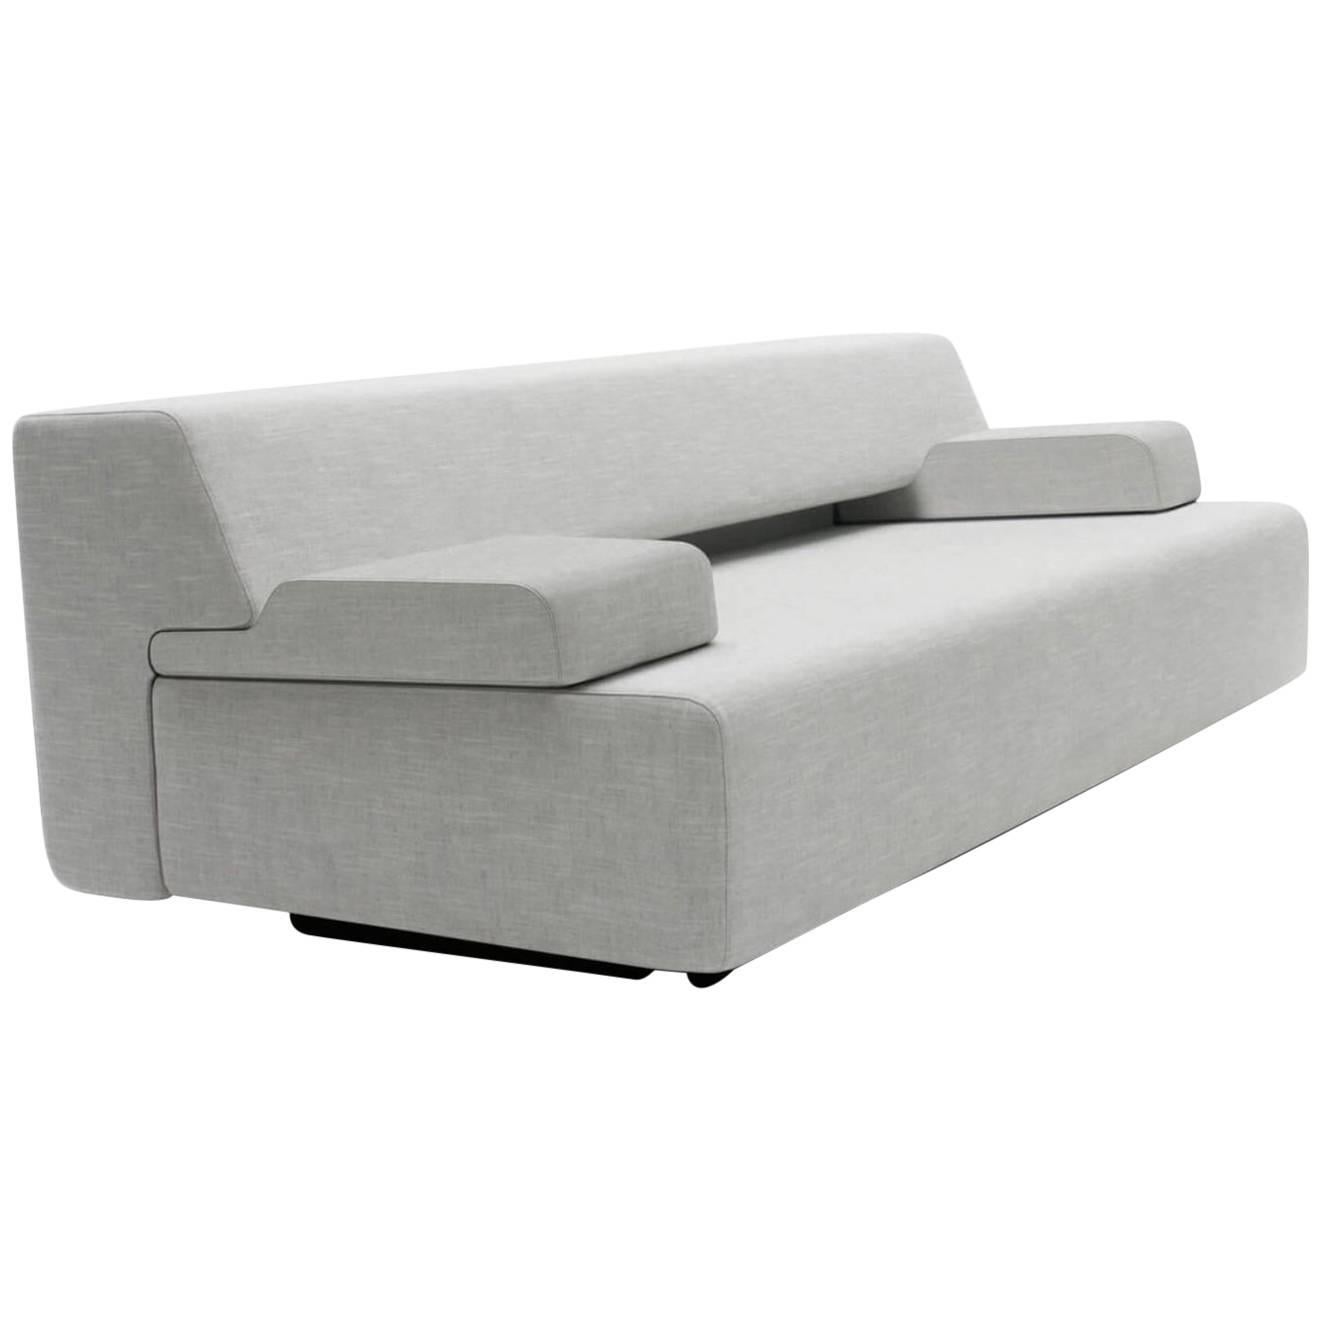 COR Cosma Sleeper Sofa in Fabric or Leather For Sale